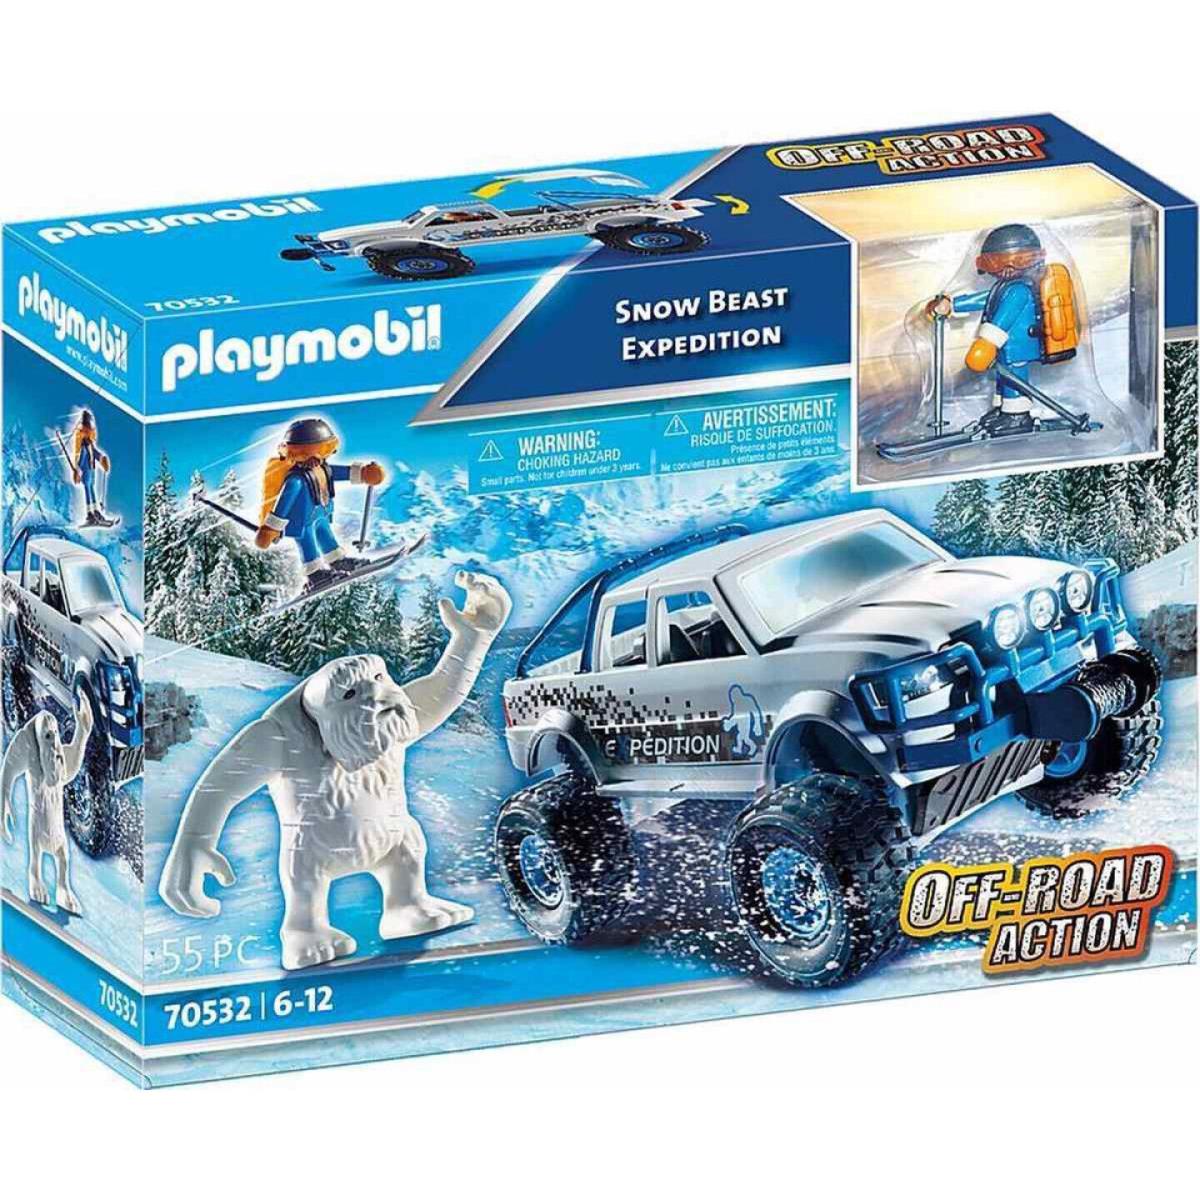 Playmobil 70532 Snow Beast Expedition Building Kit